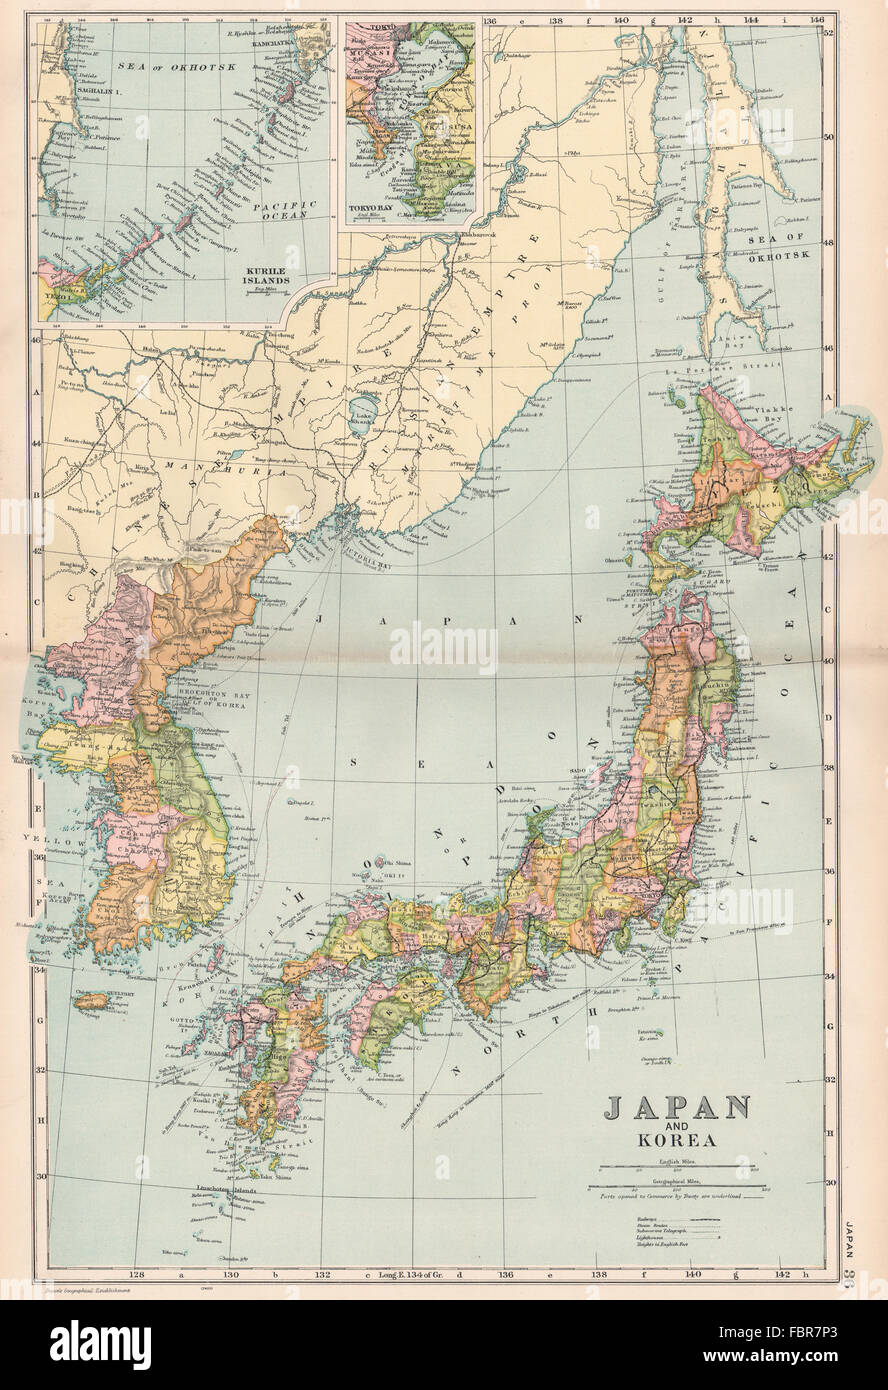 JAPAN & KOREA. Railways & steam routes. Inset Tokyo bay. BACON, 1903 old map Stock Photo